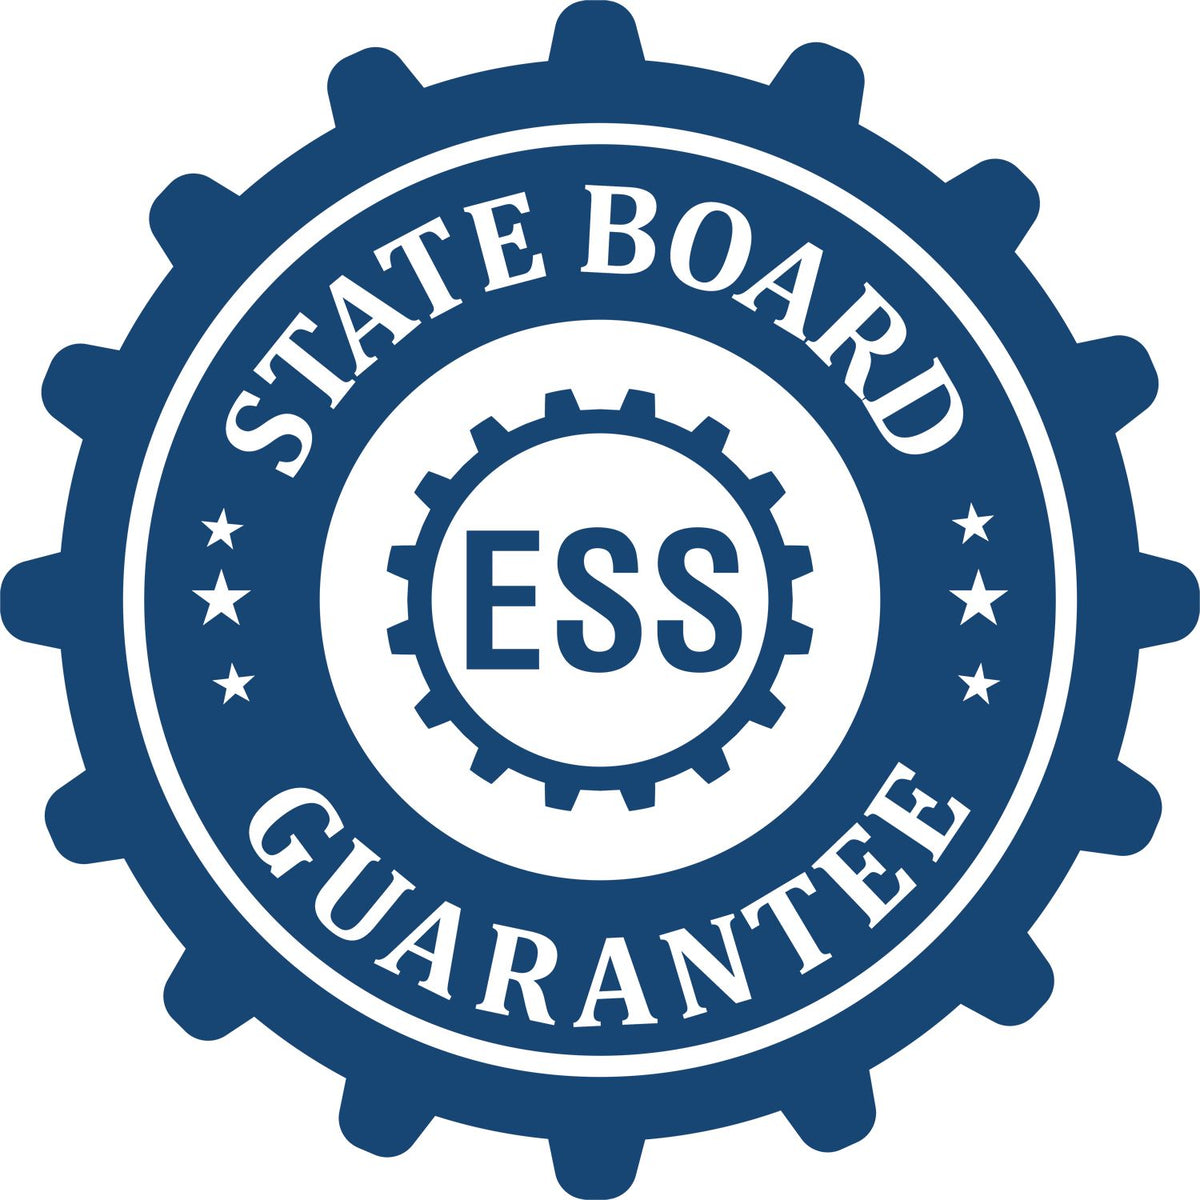 An emblem in a gear shape illustrating a state board guarantee for the Hybrid North Carolina Land Surveyor Seal